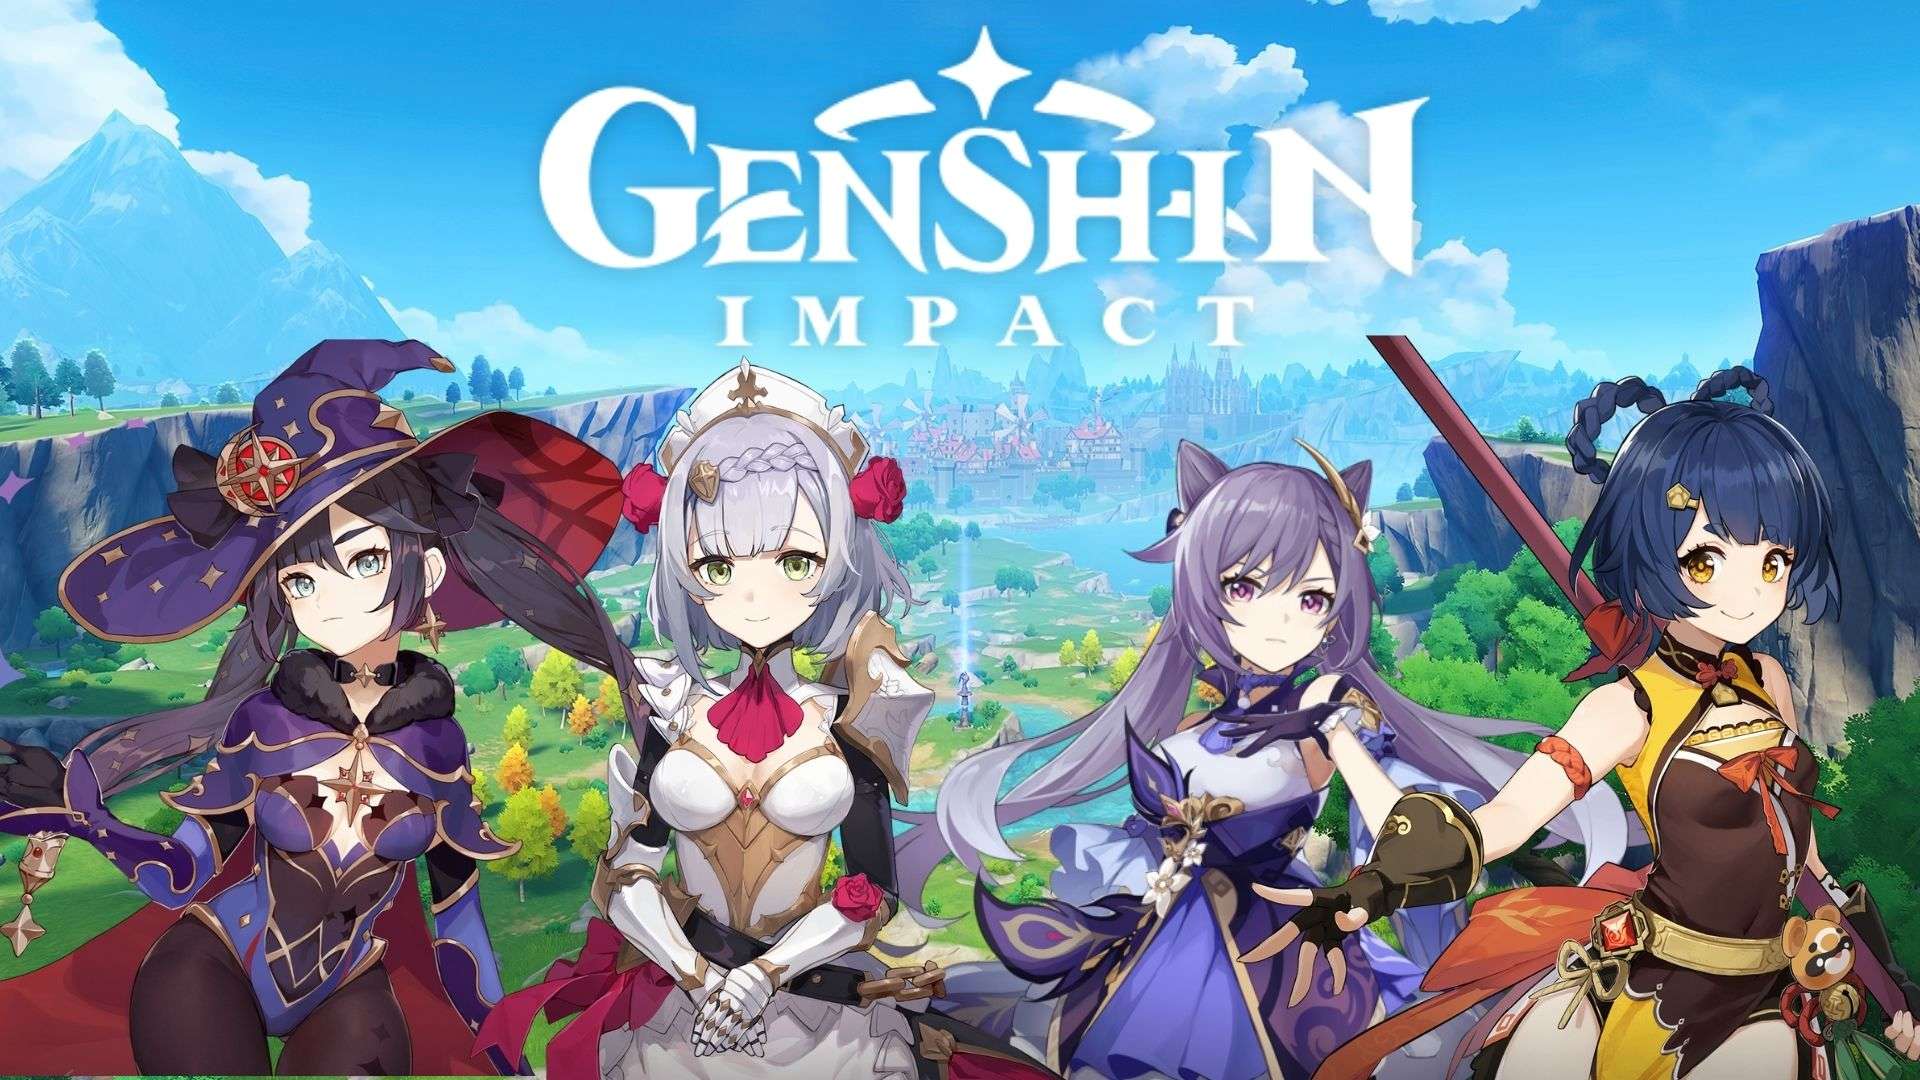 Genshin Impact characters next to the logo